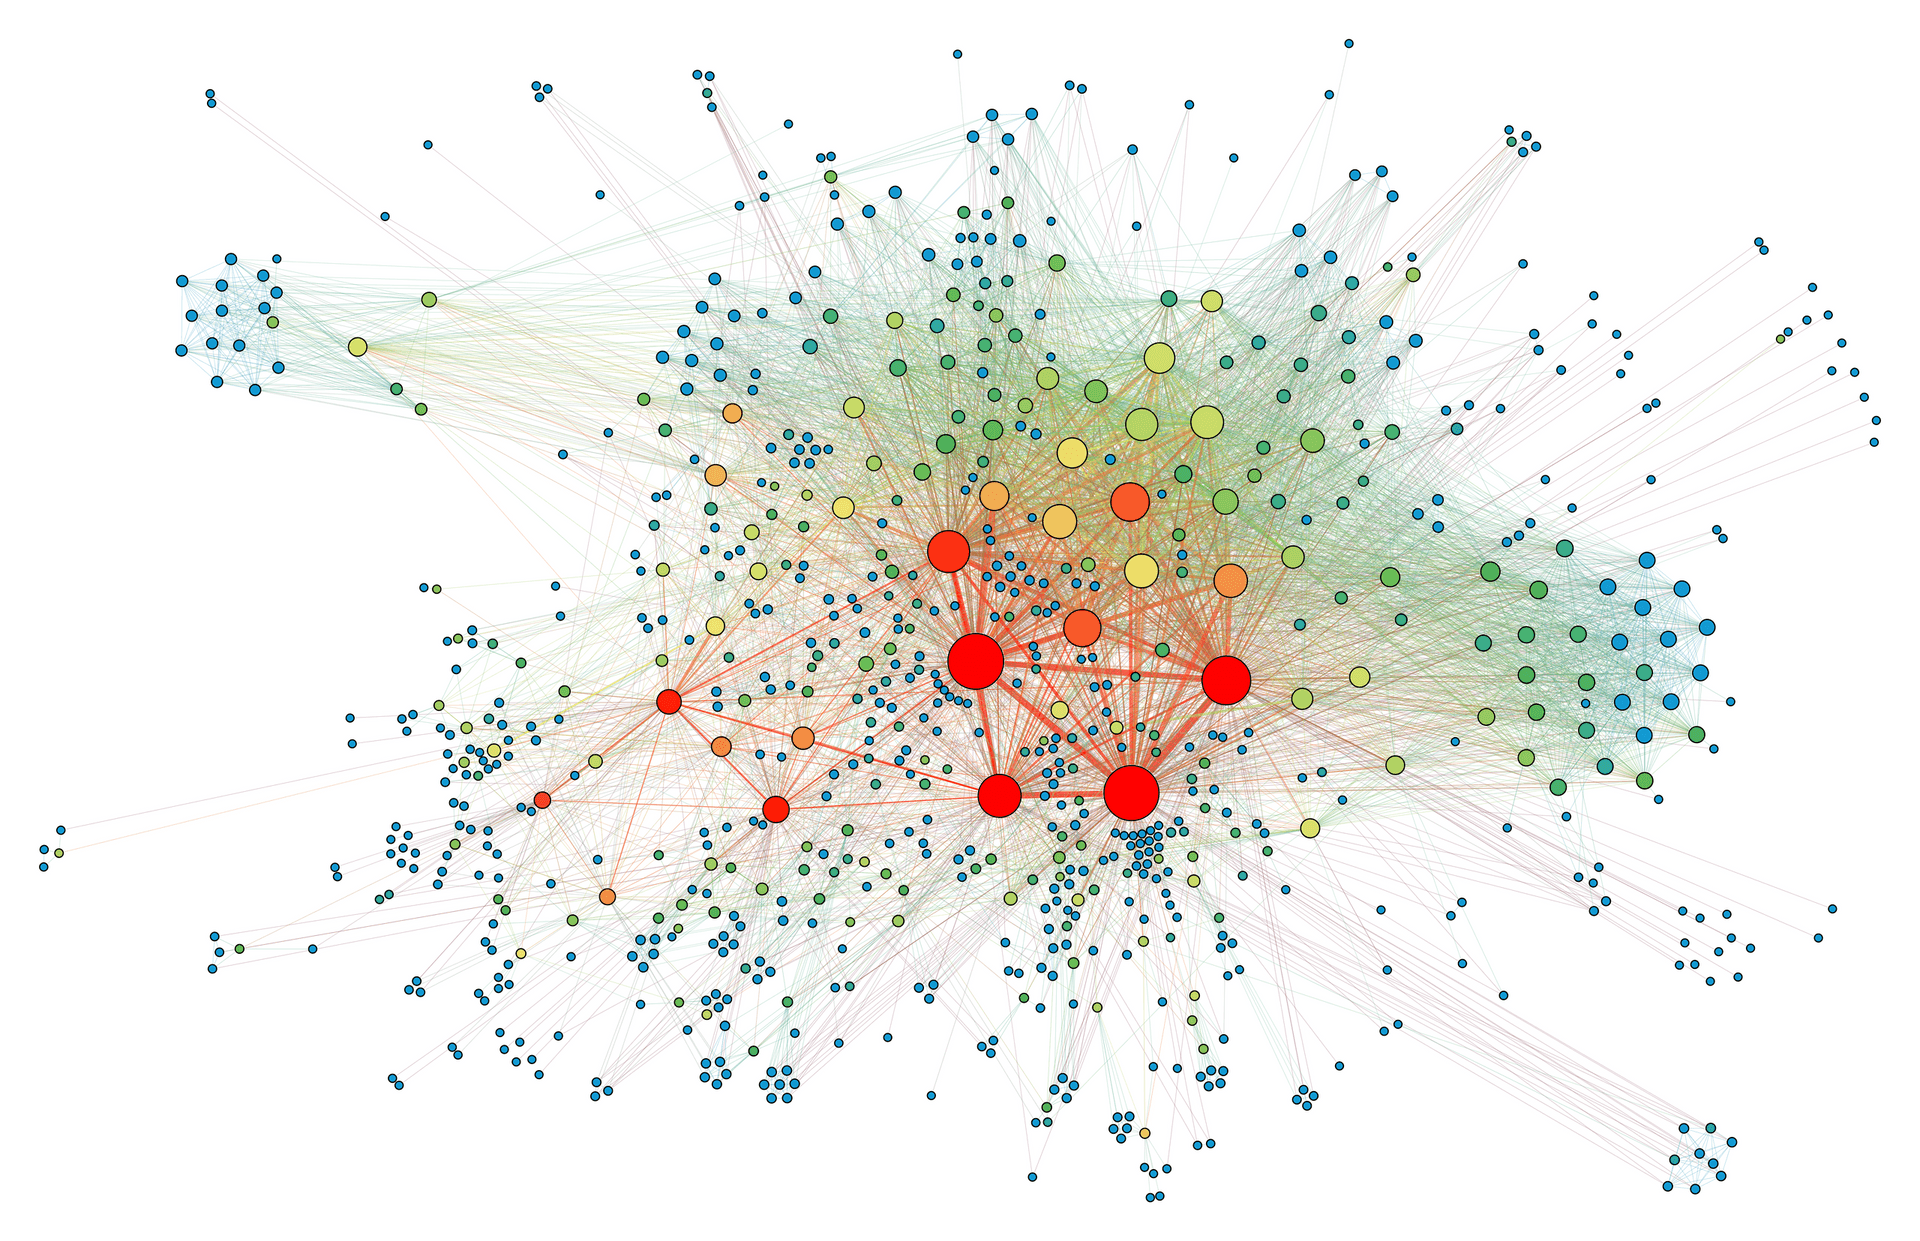 A social network graph.